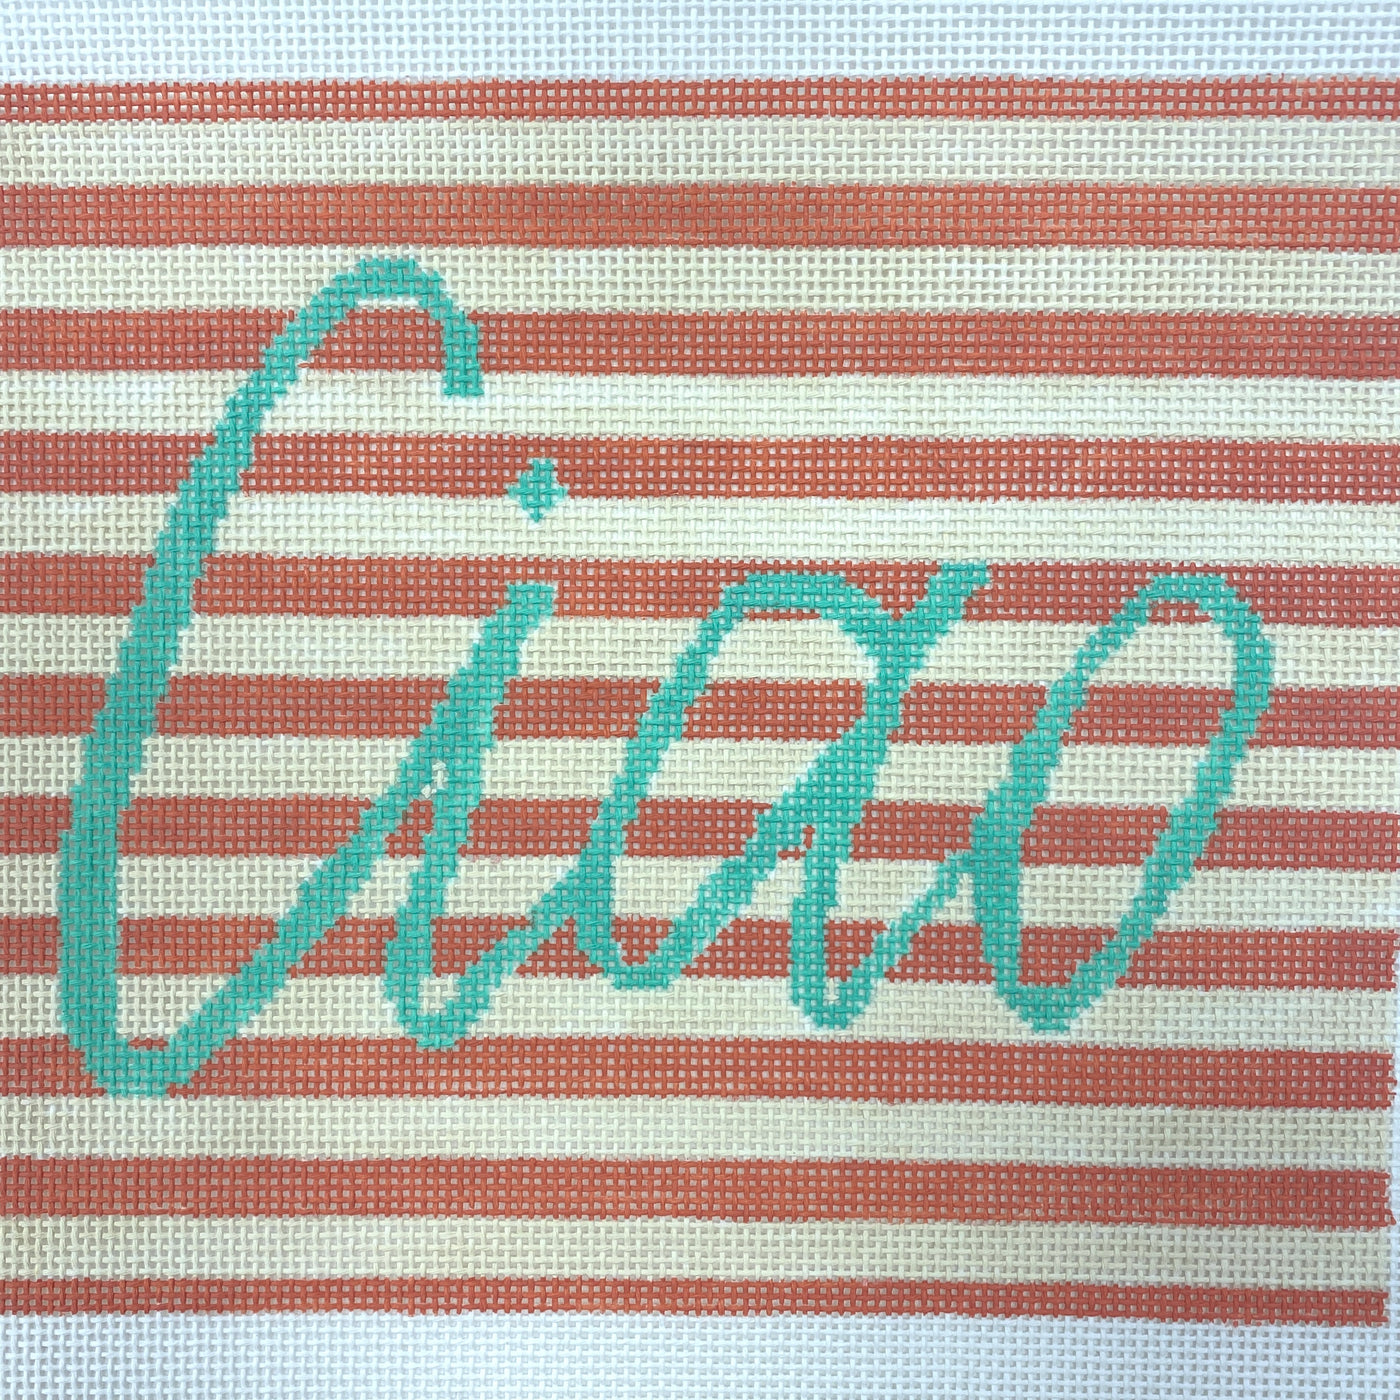 Ciao on Stripes Needlepoint Canvas